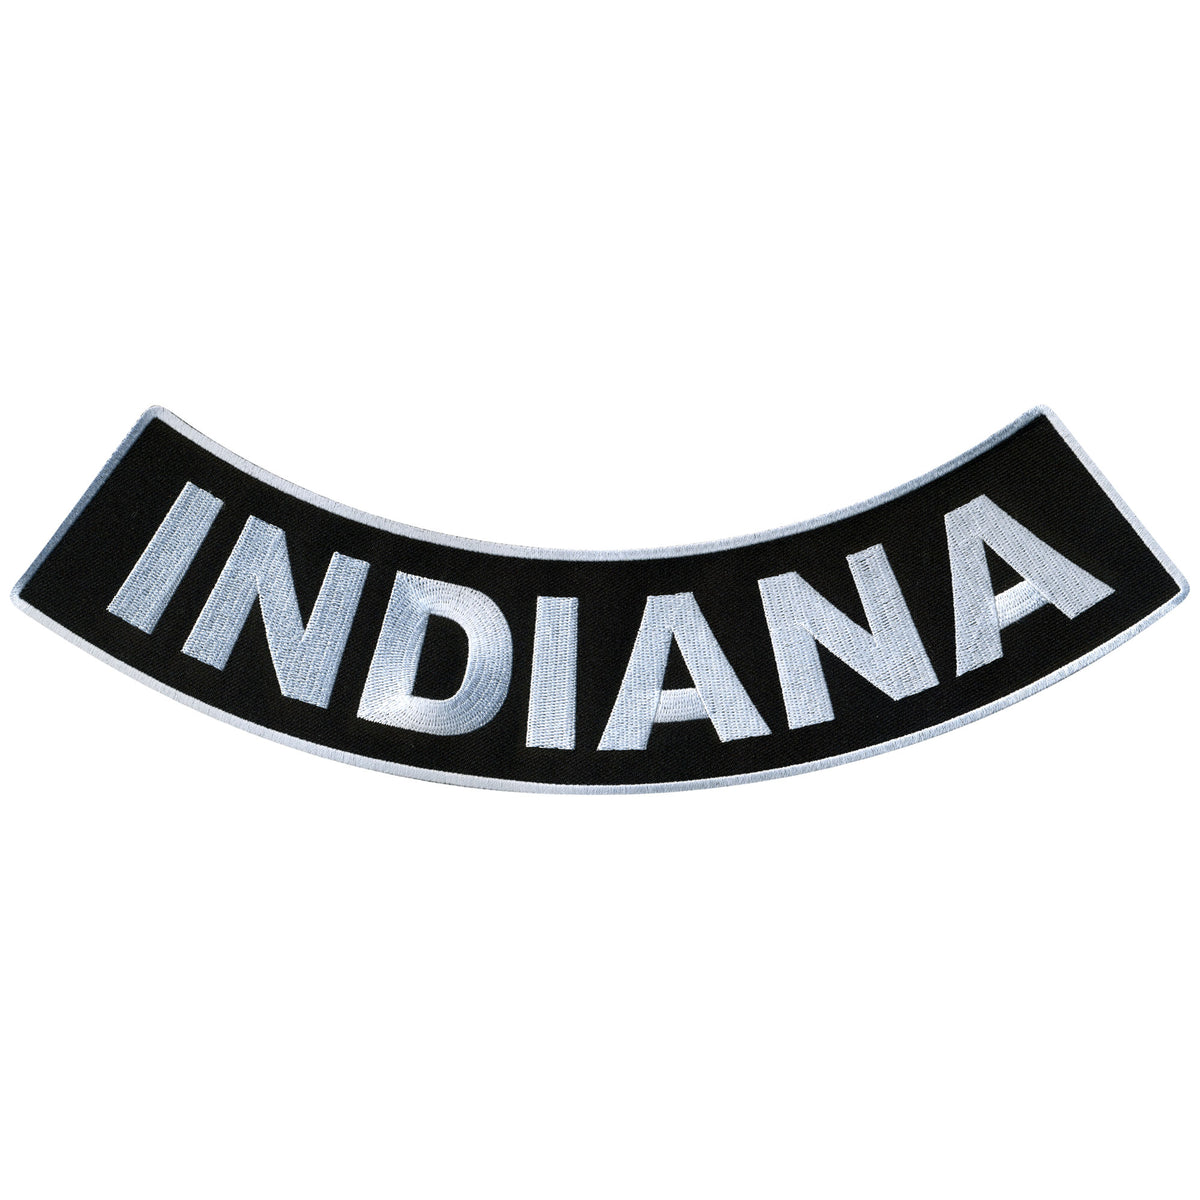 Hot Leathers Indiana 12” X 3” Bottom Rocker Patch